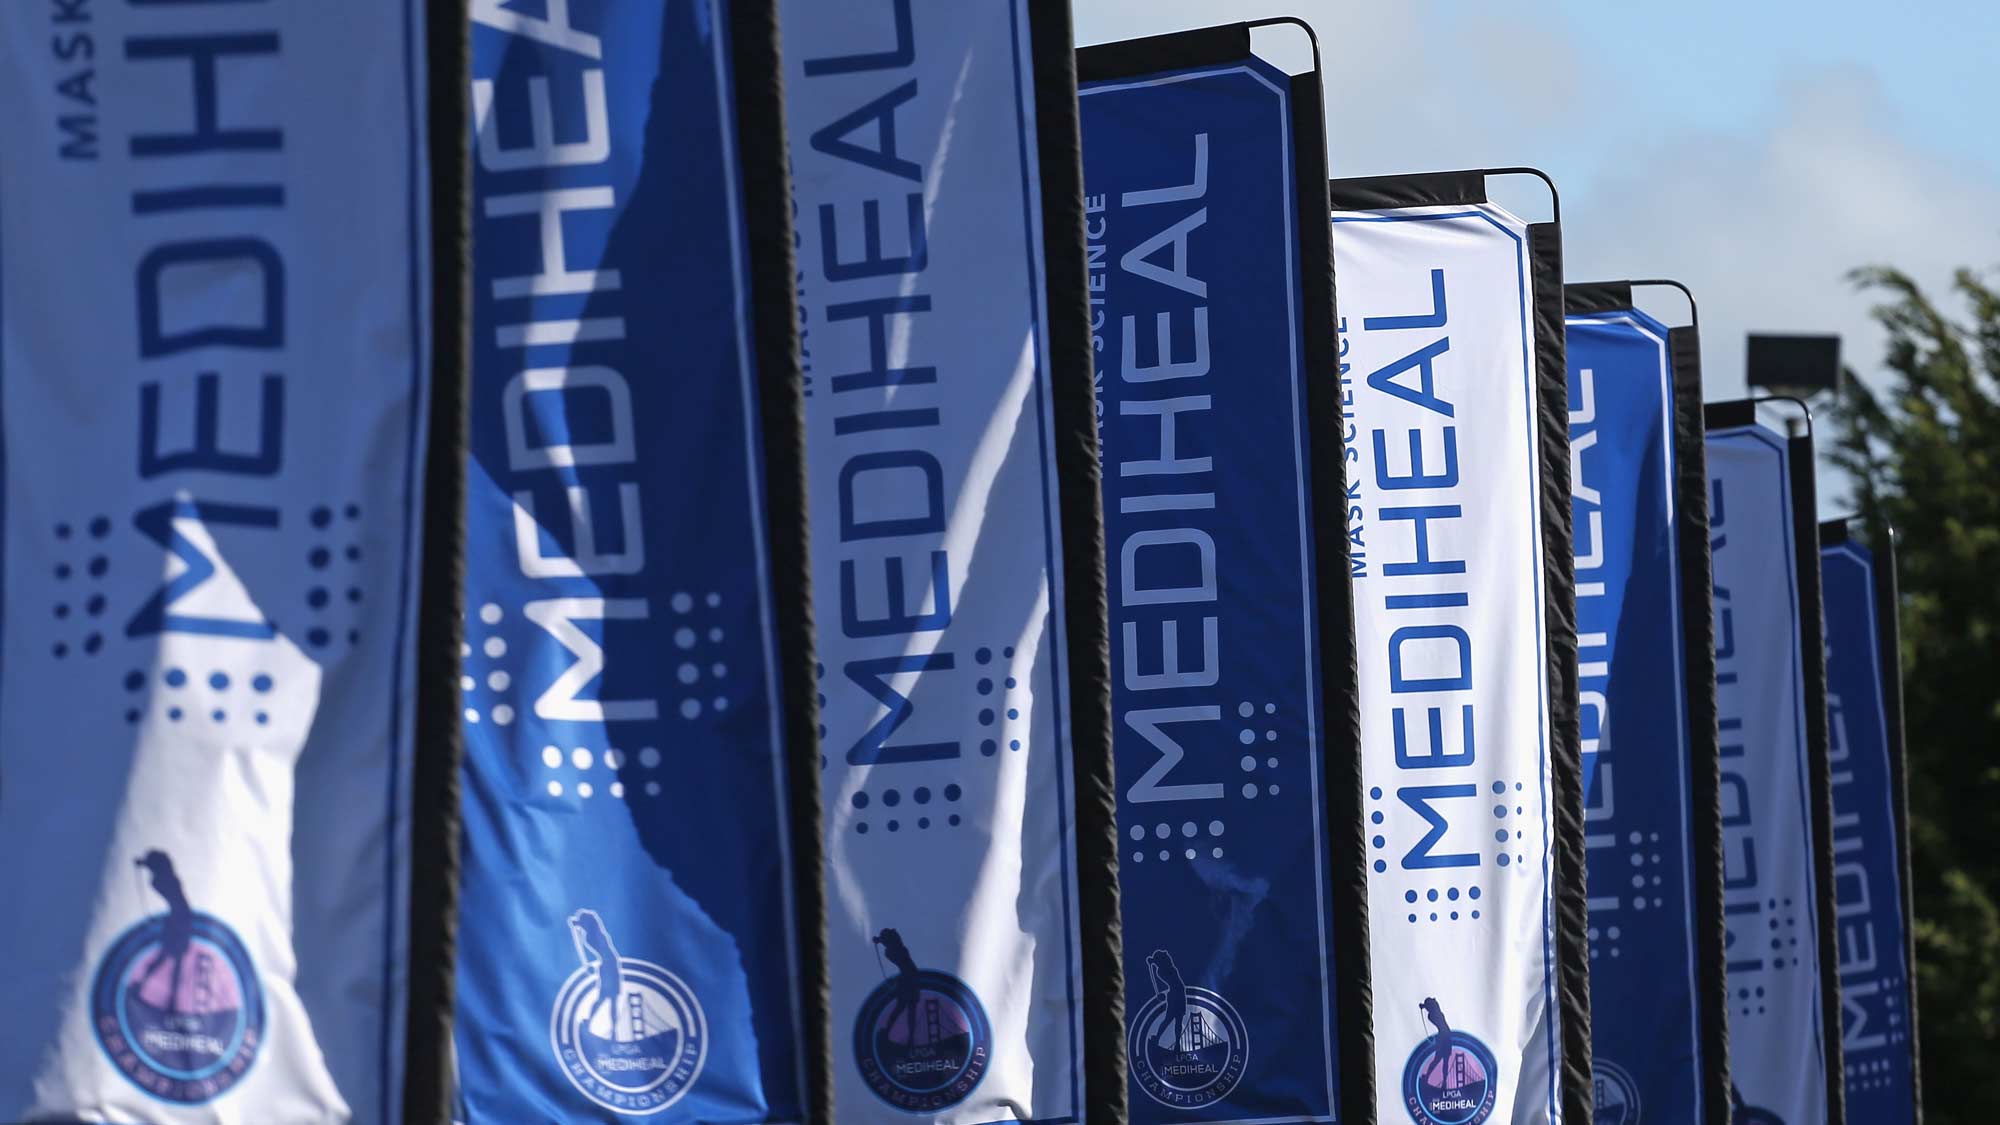 Mediheal-Banners